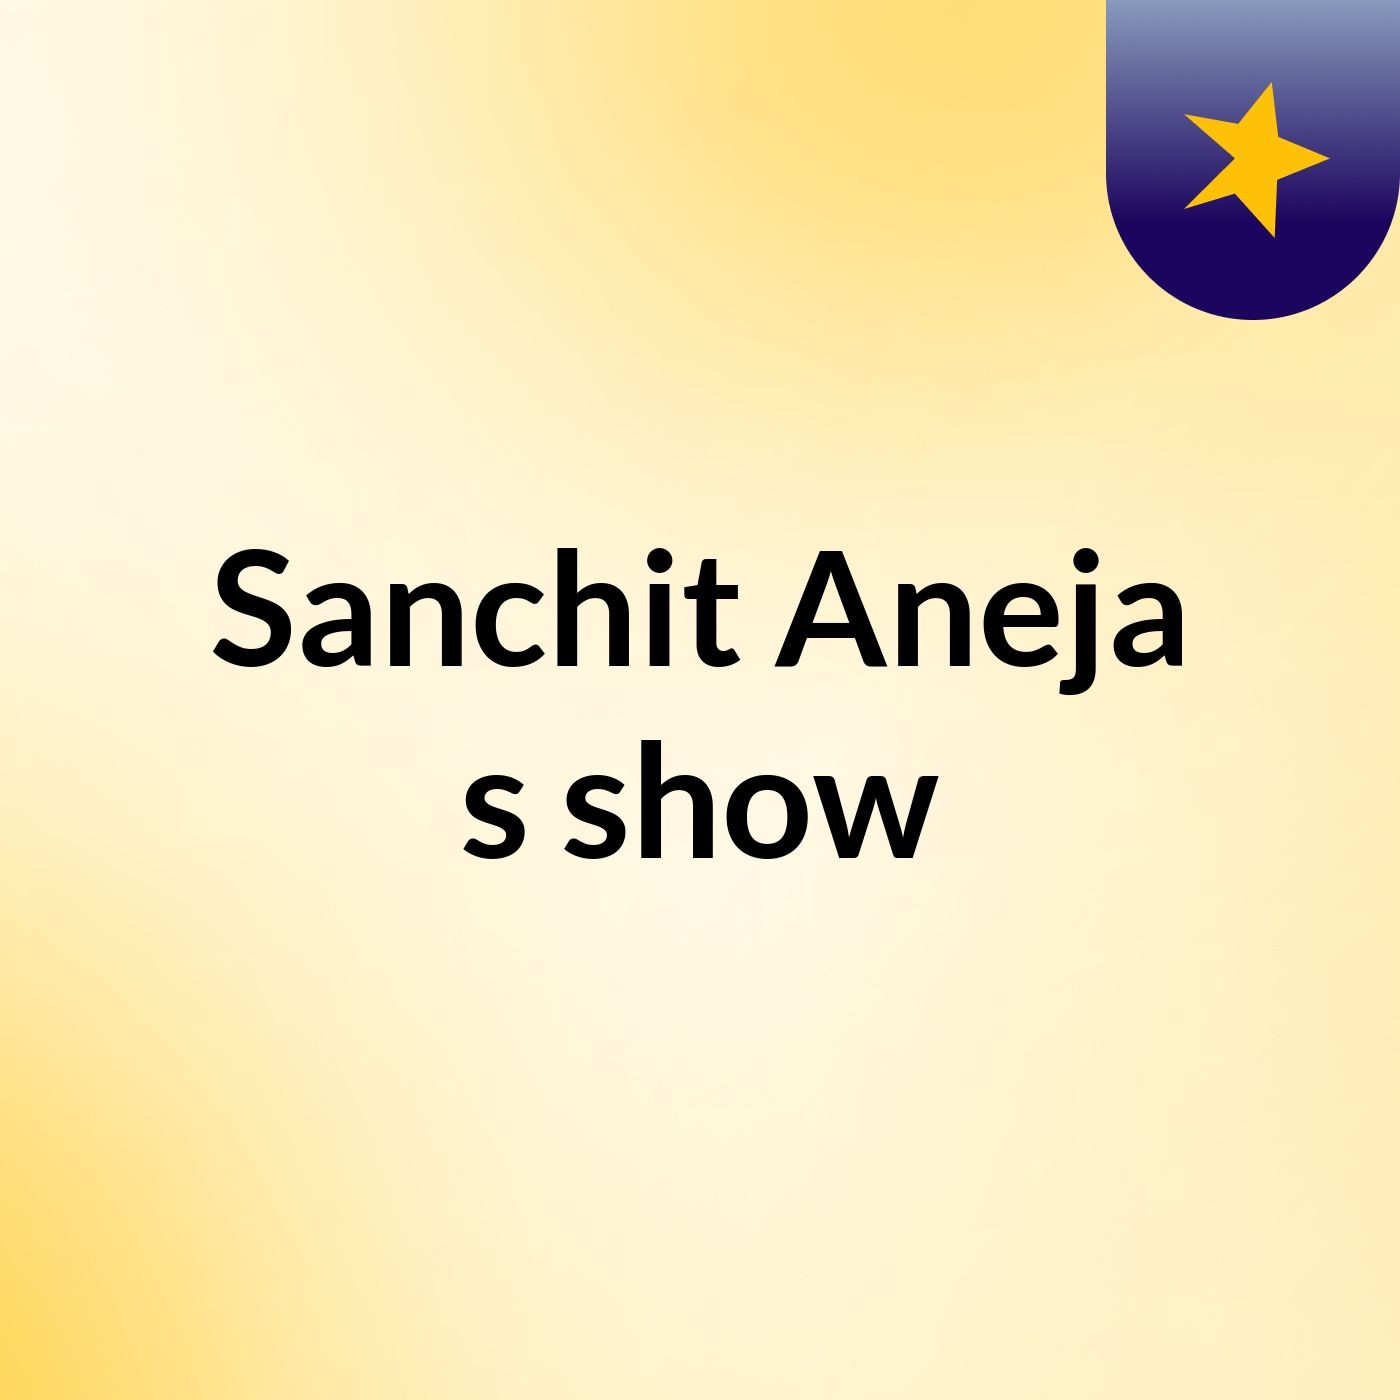 Sanchit Aneja's show